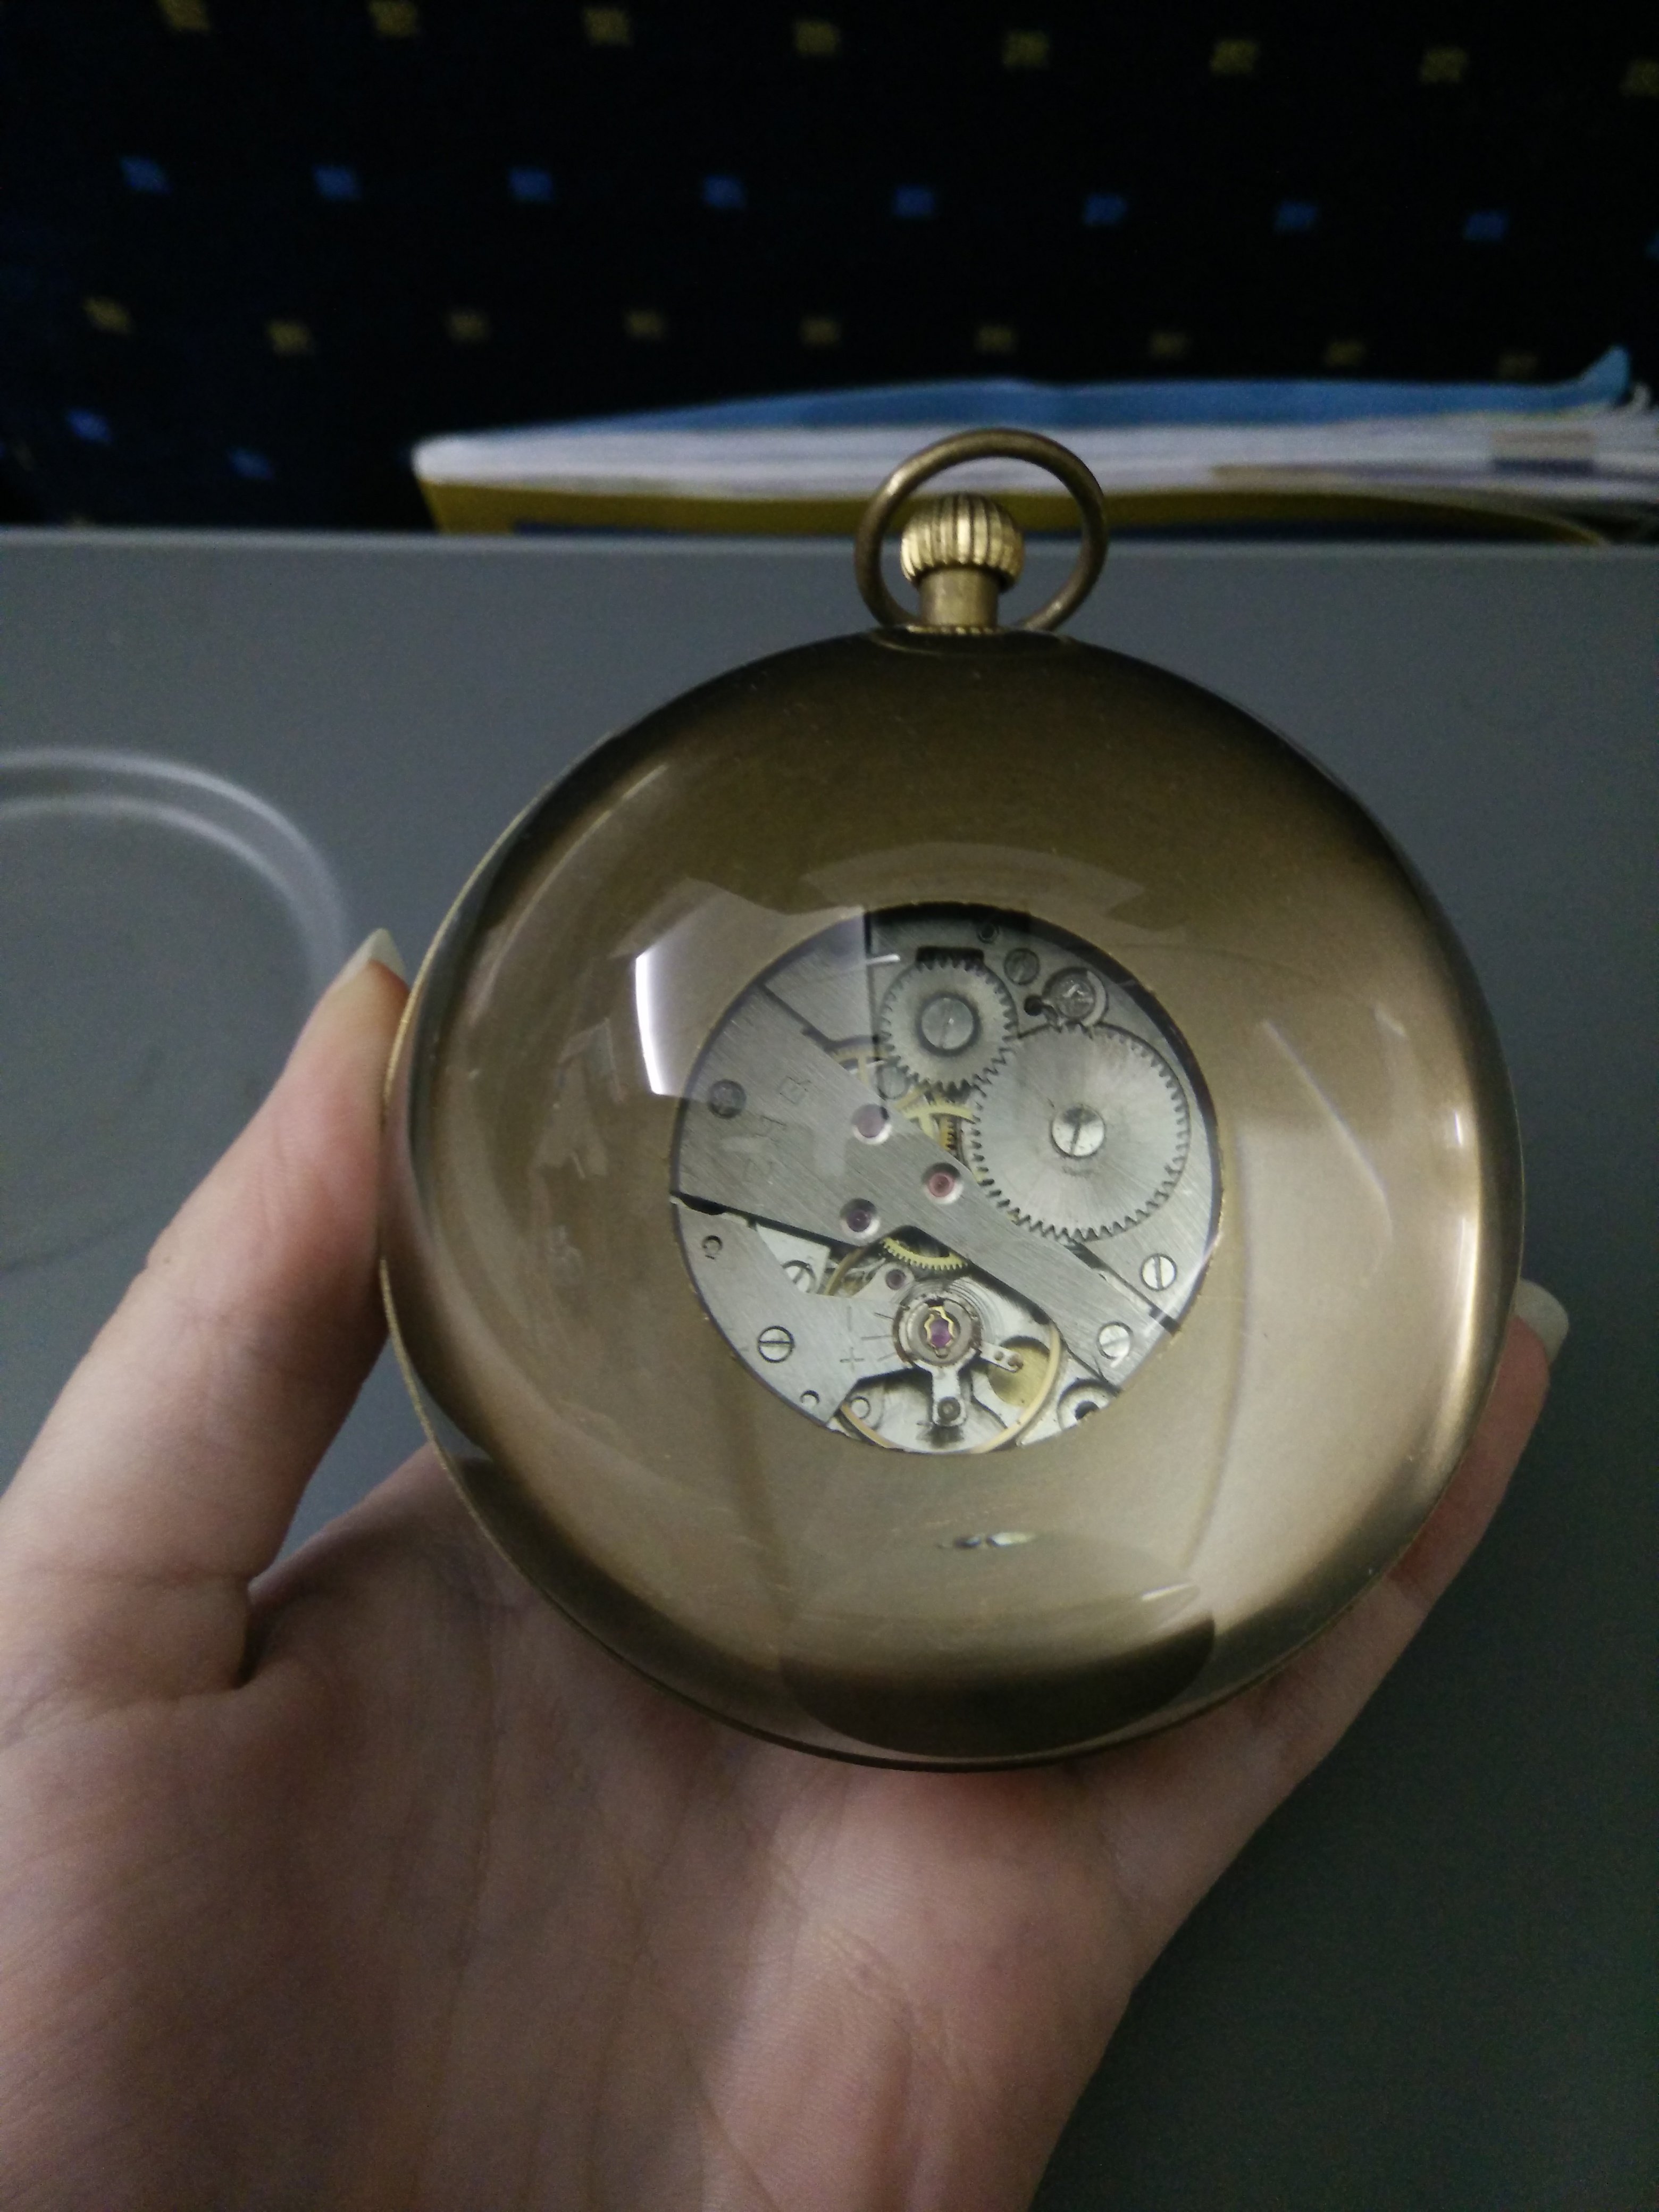 omega 1882 Glass clock | Omega Forums